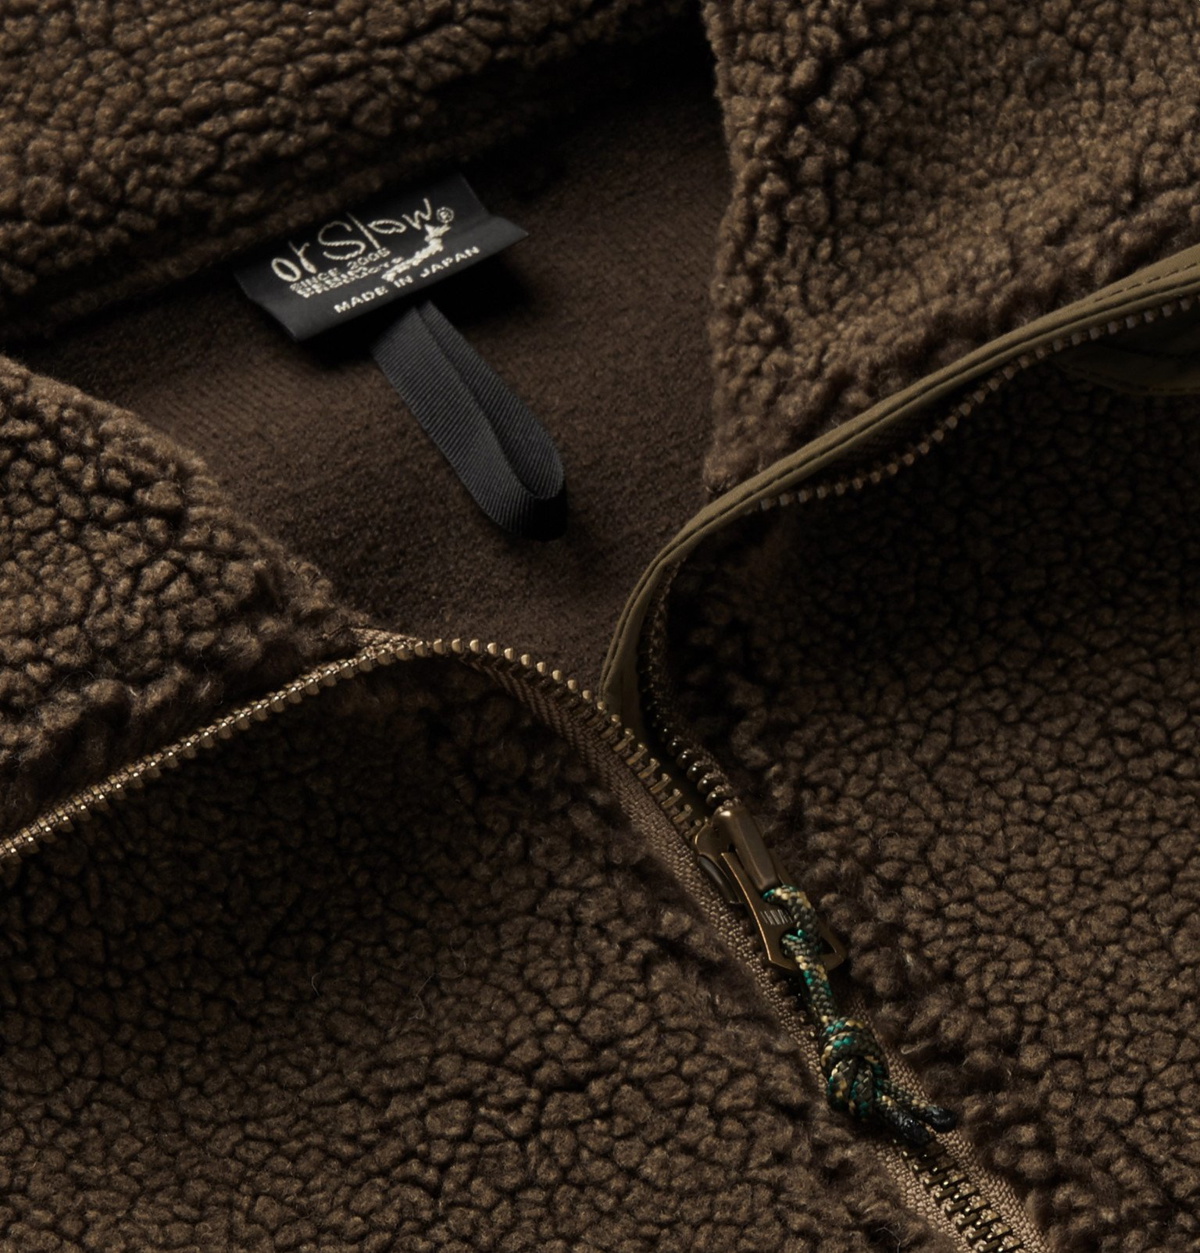 Orslow Men's Fleece-Jacquard Jacket